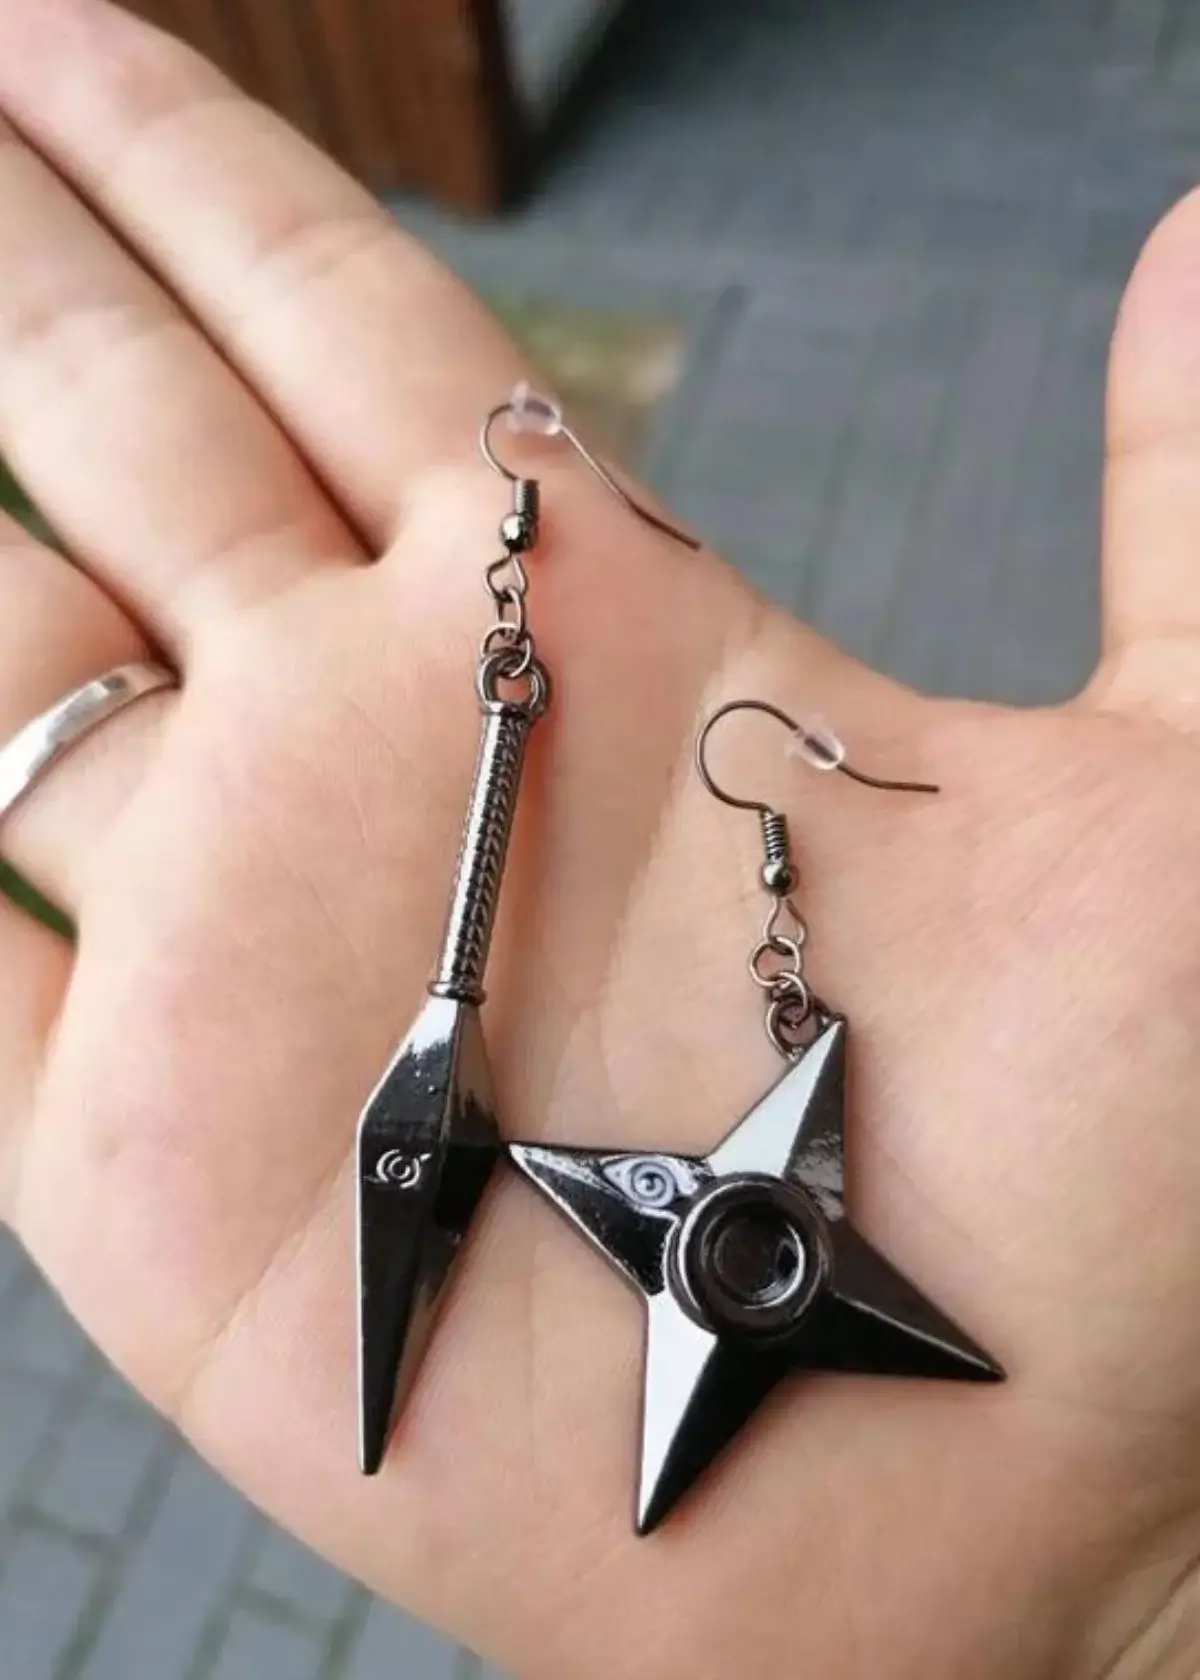 How to choose the right kunai earrings?